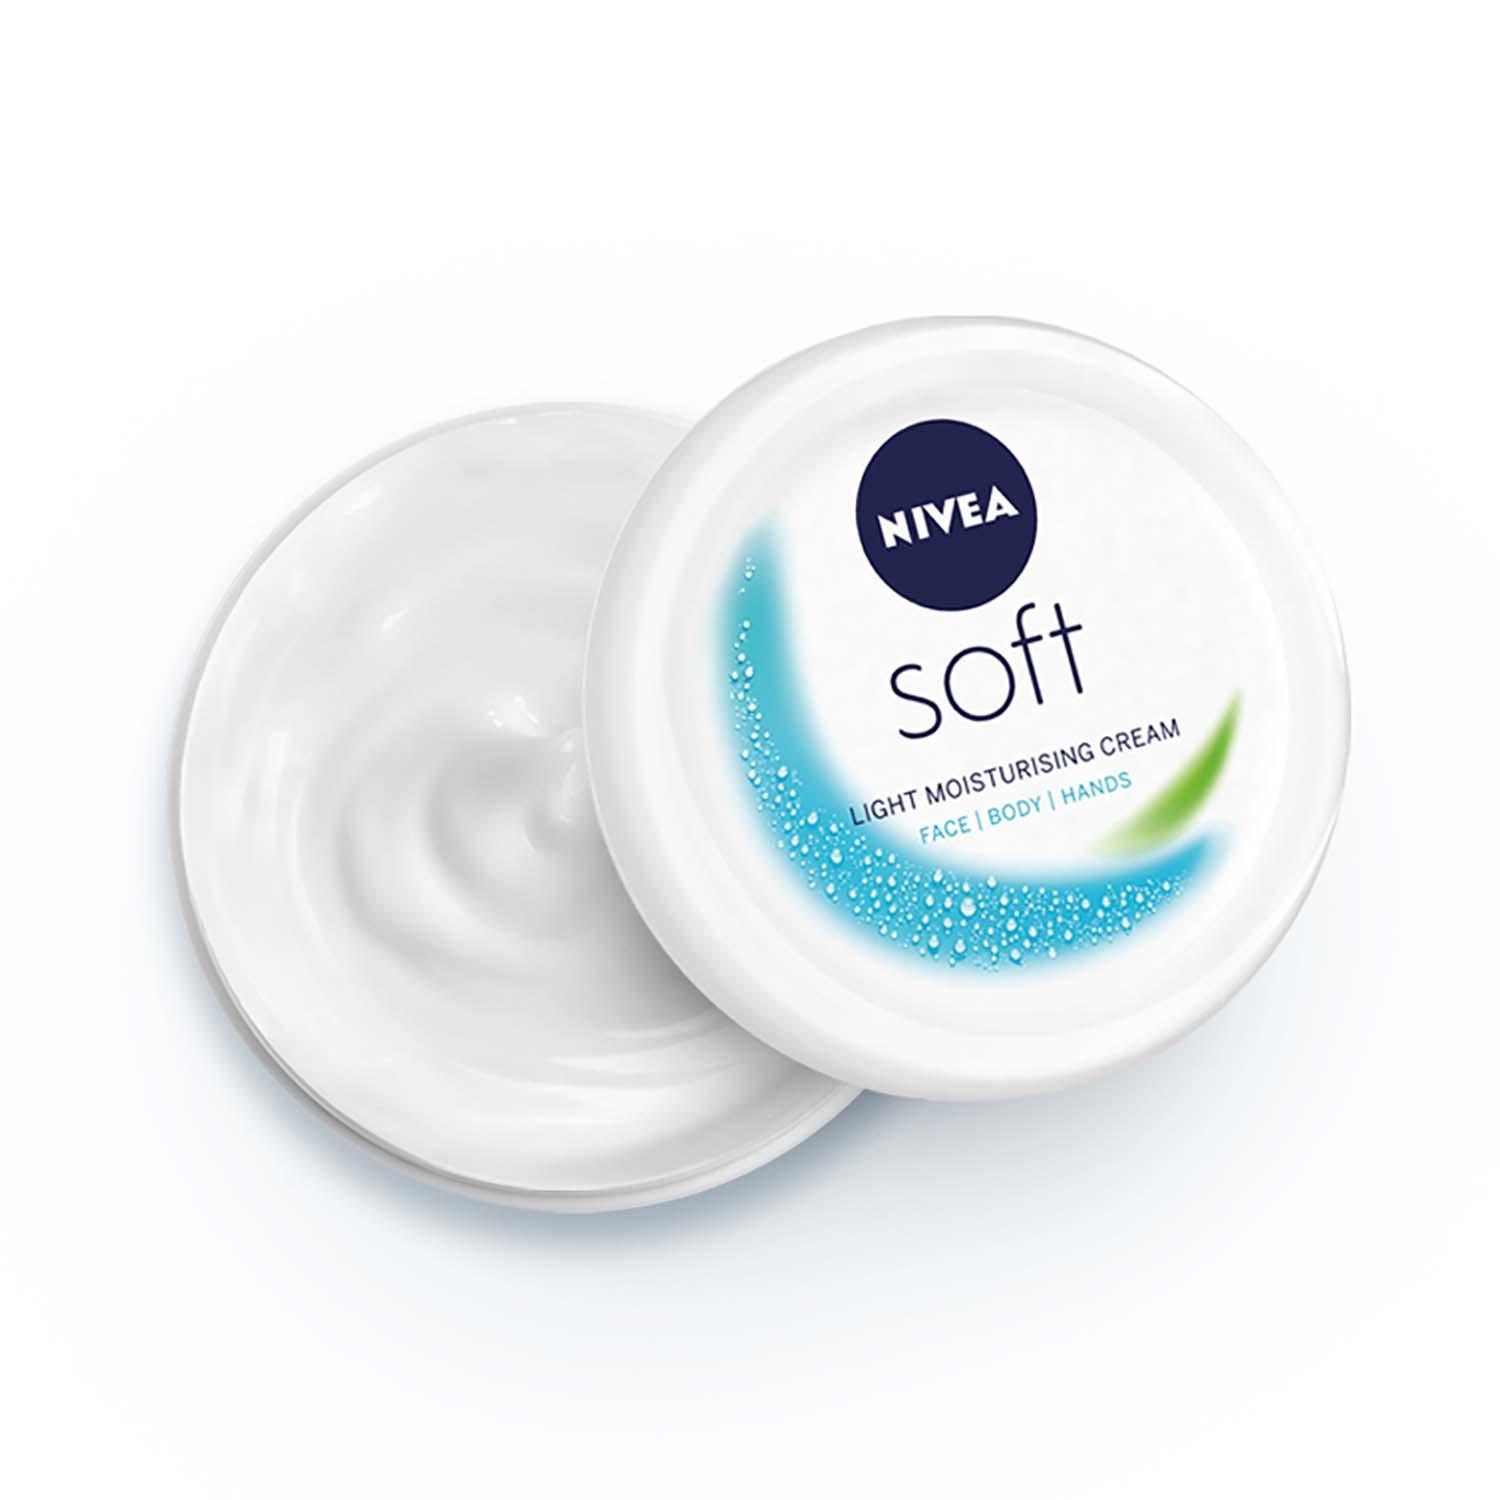 nivea soft light moisturizer cream (100ml)